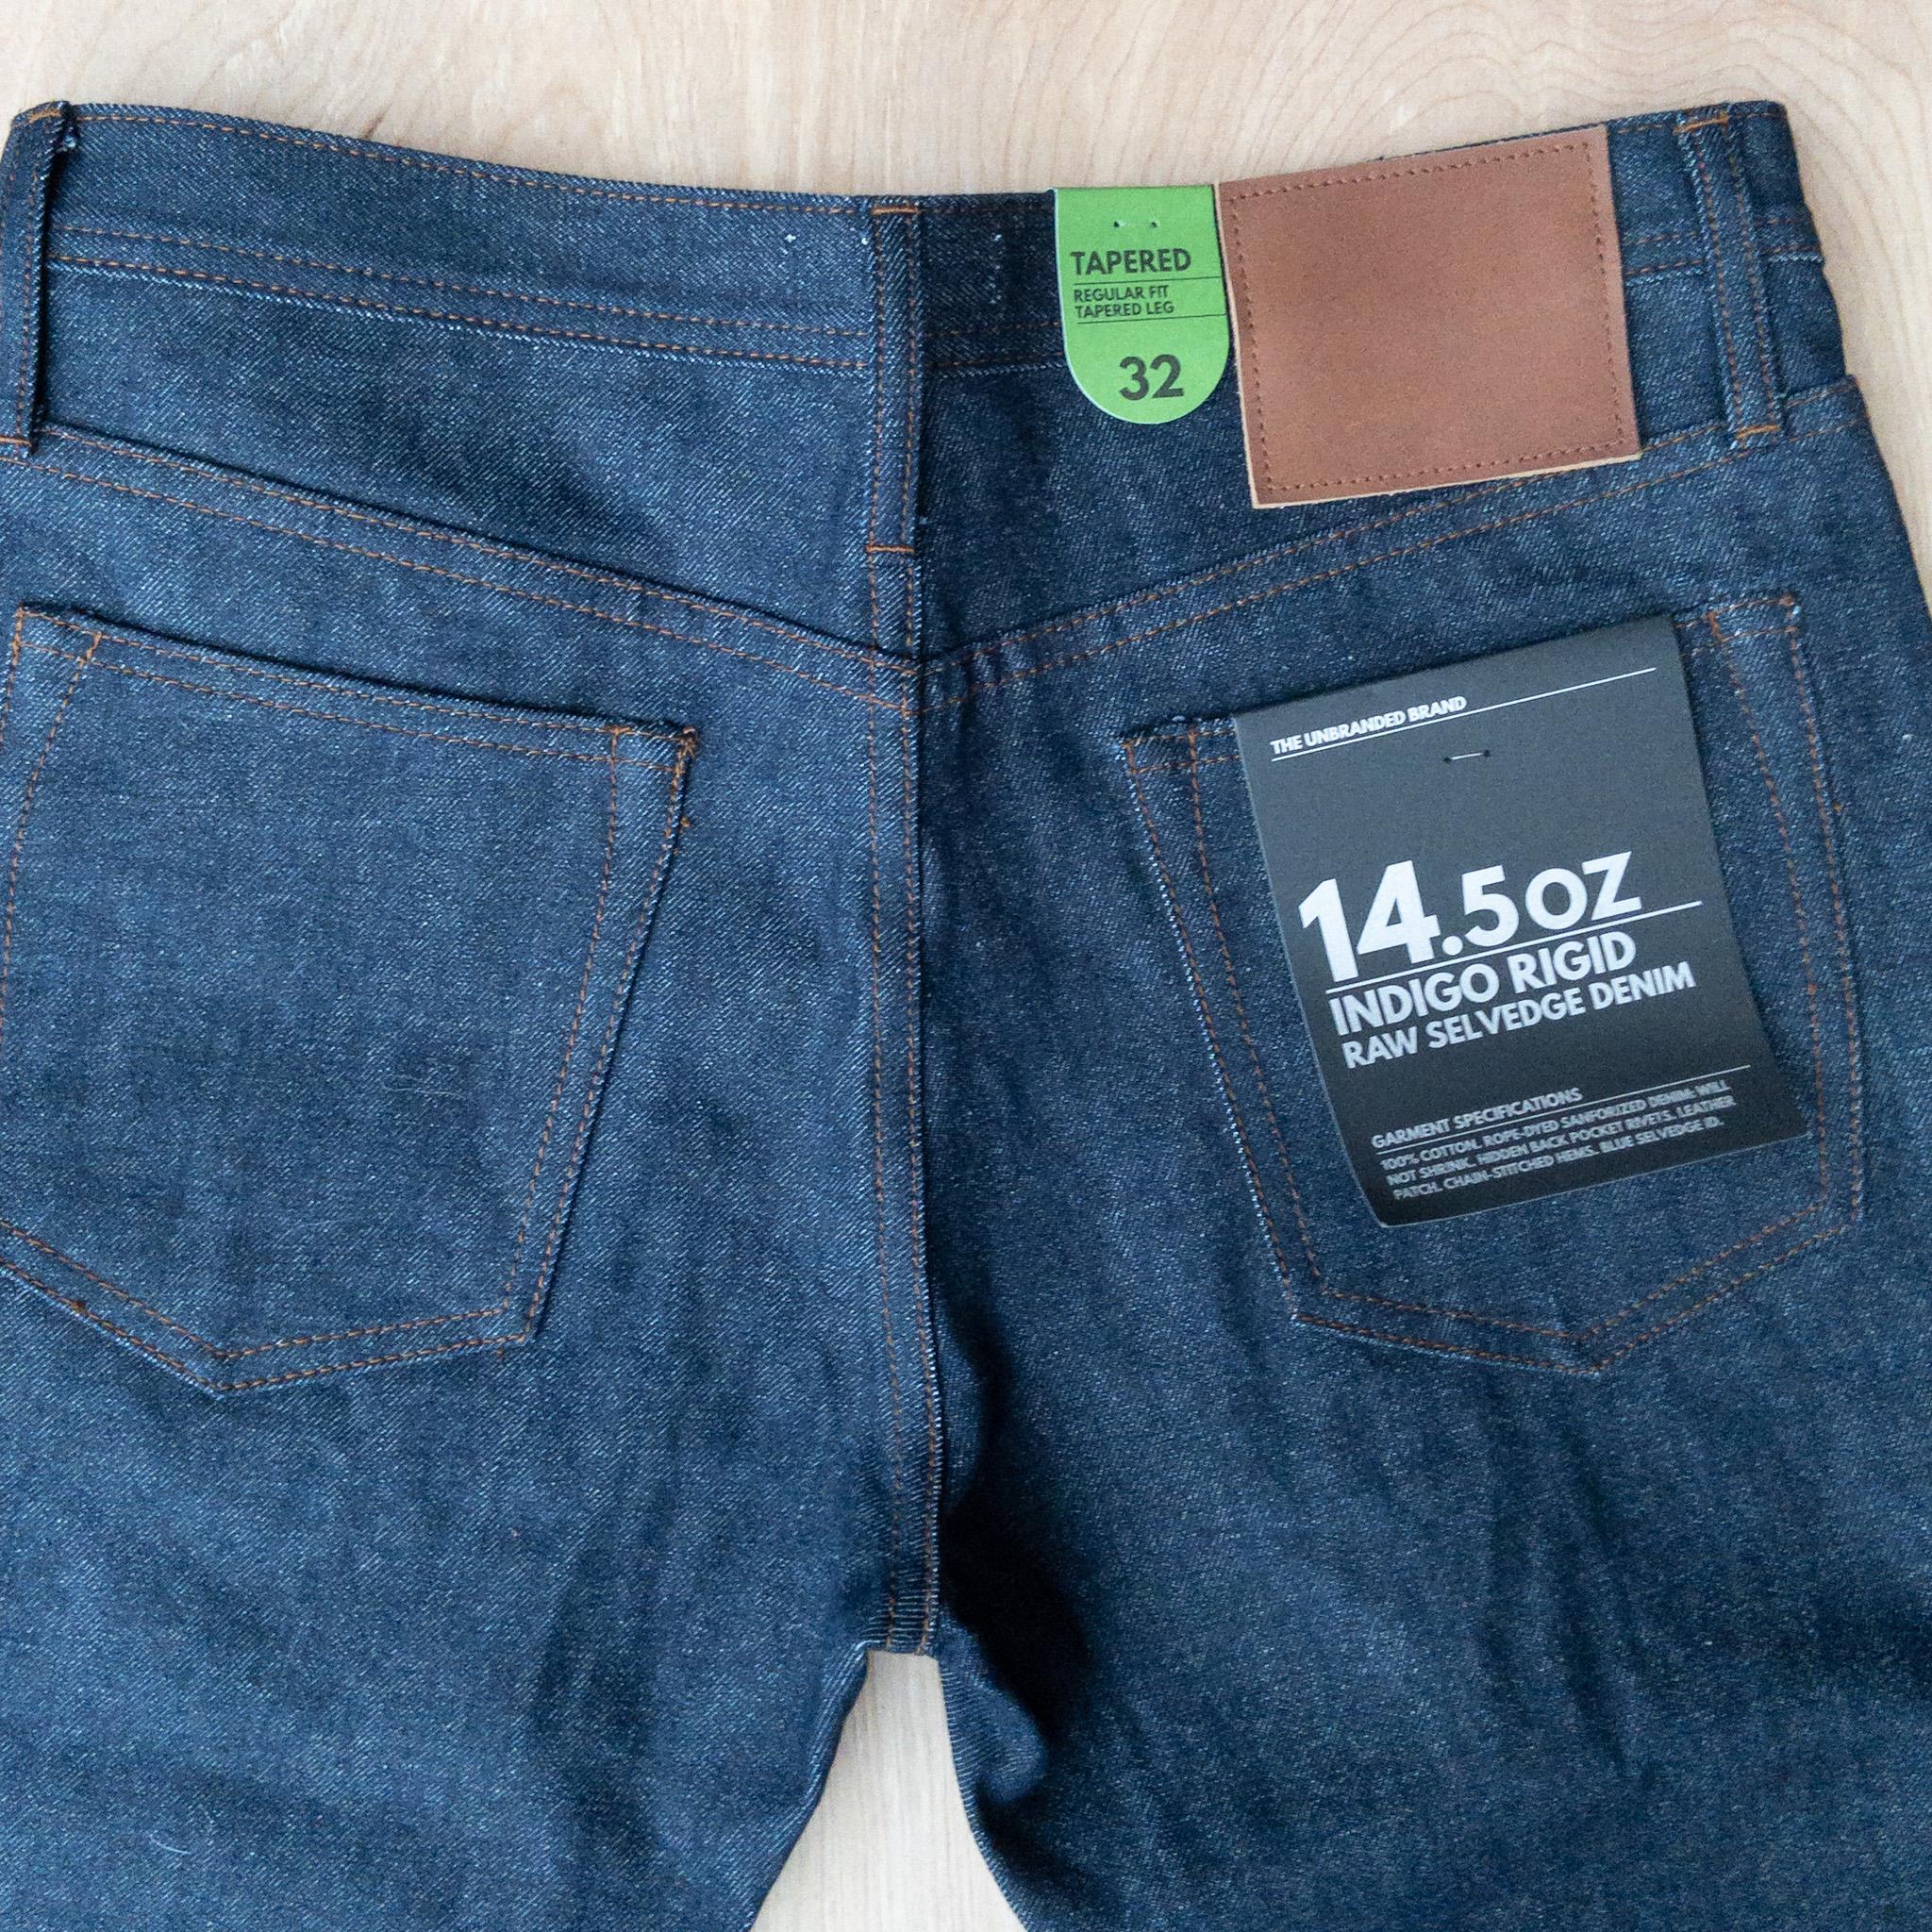 The Unbranded Brand Raw Denim Jeans - Tapered 14.5oz Indigo Selvedge